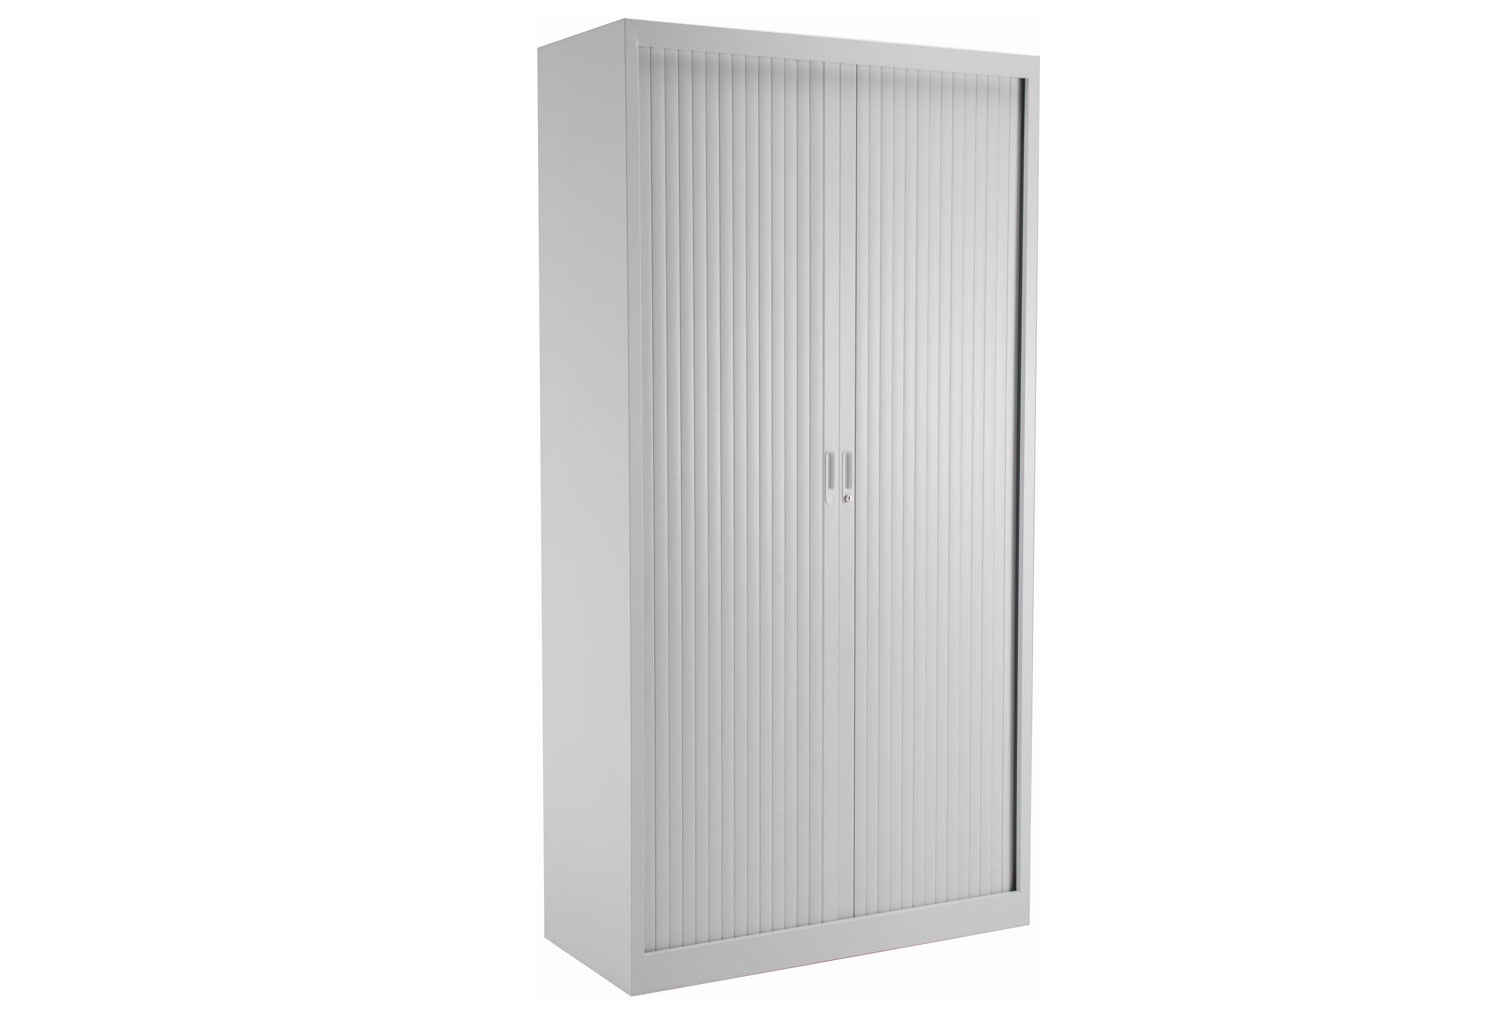 Value Line Metal Tambour Door Office Cupboards, 4 Shelf - 100wx45dx195h (cm), White, Express Delivery